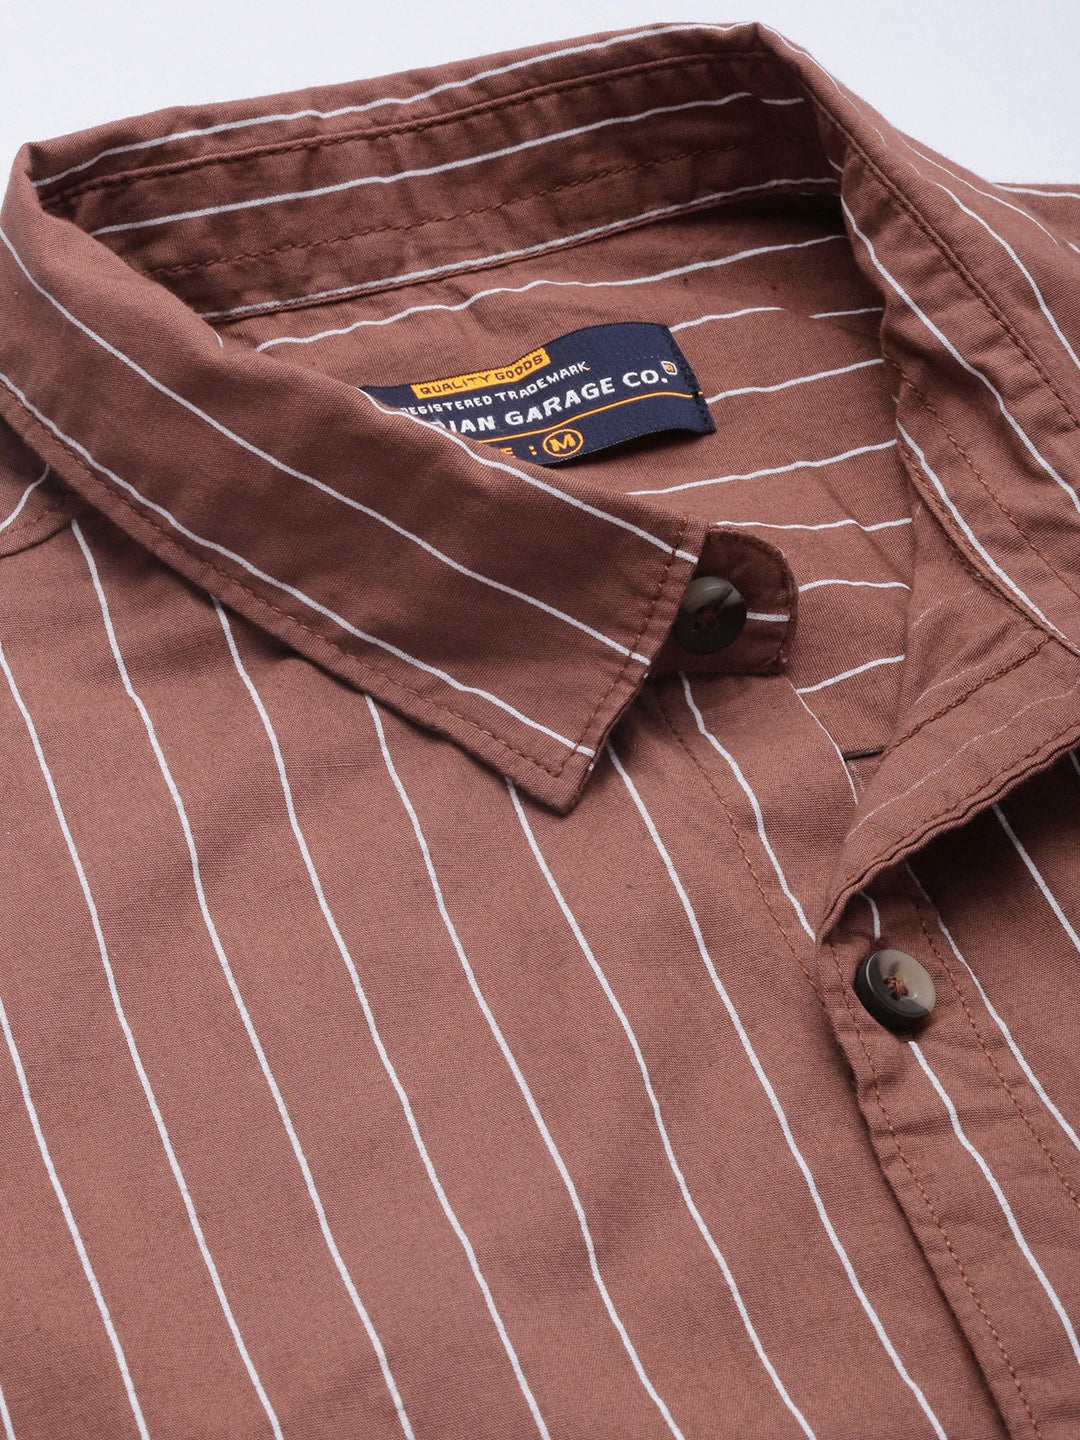 Shop Men Striped Casual Shirt Online.